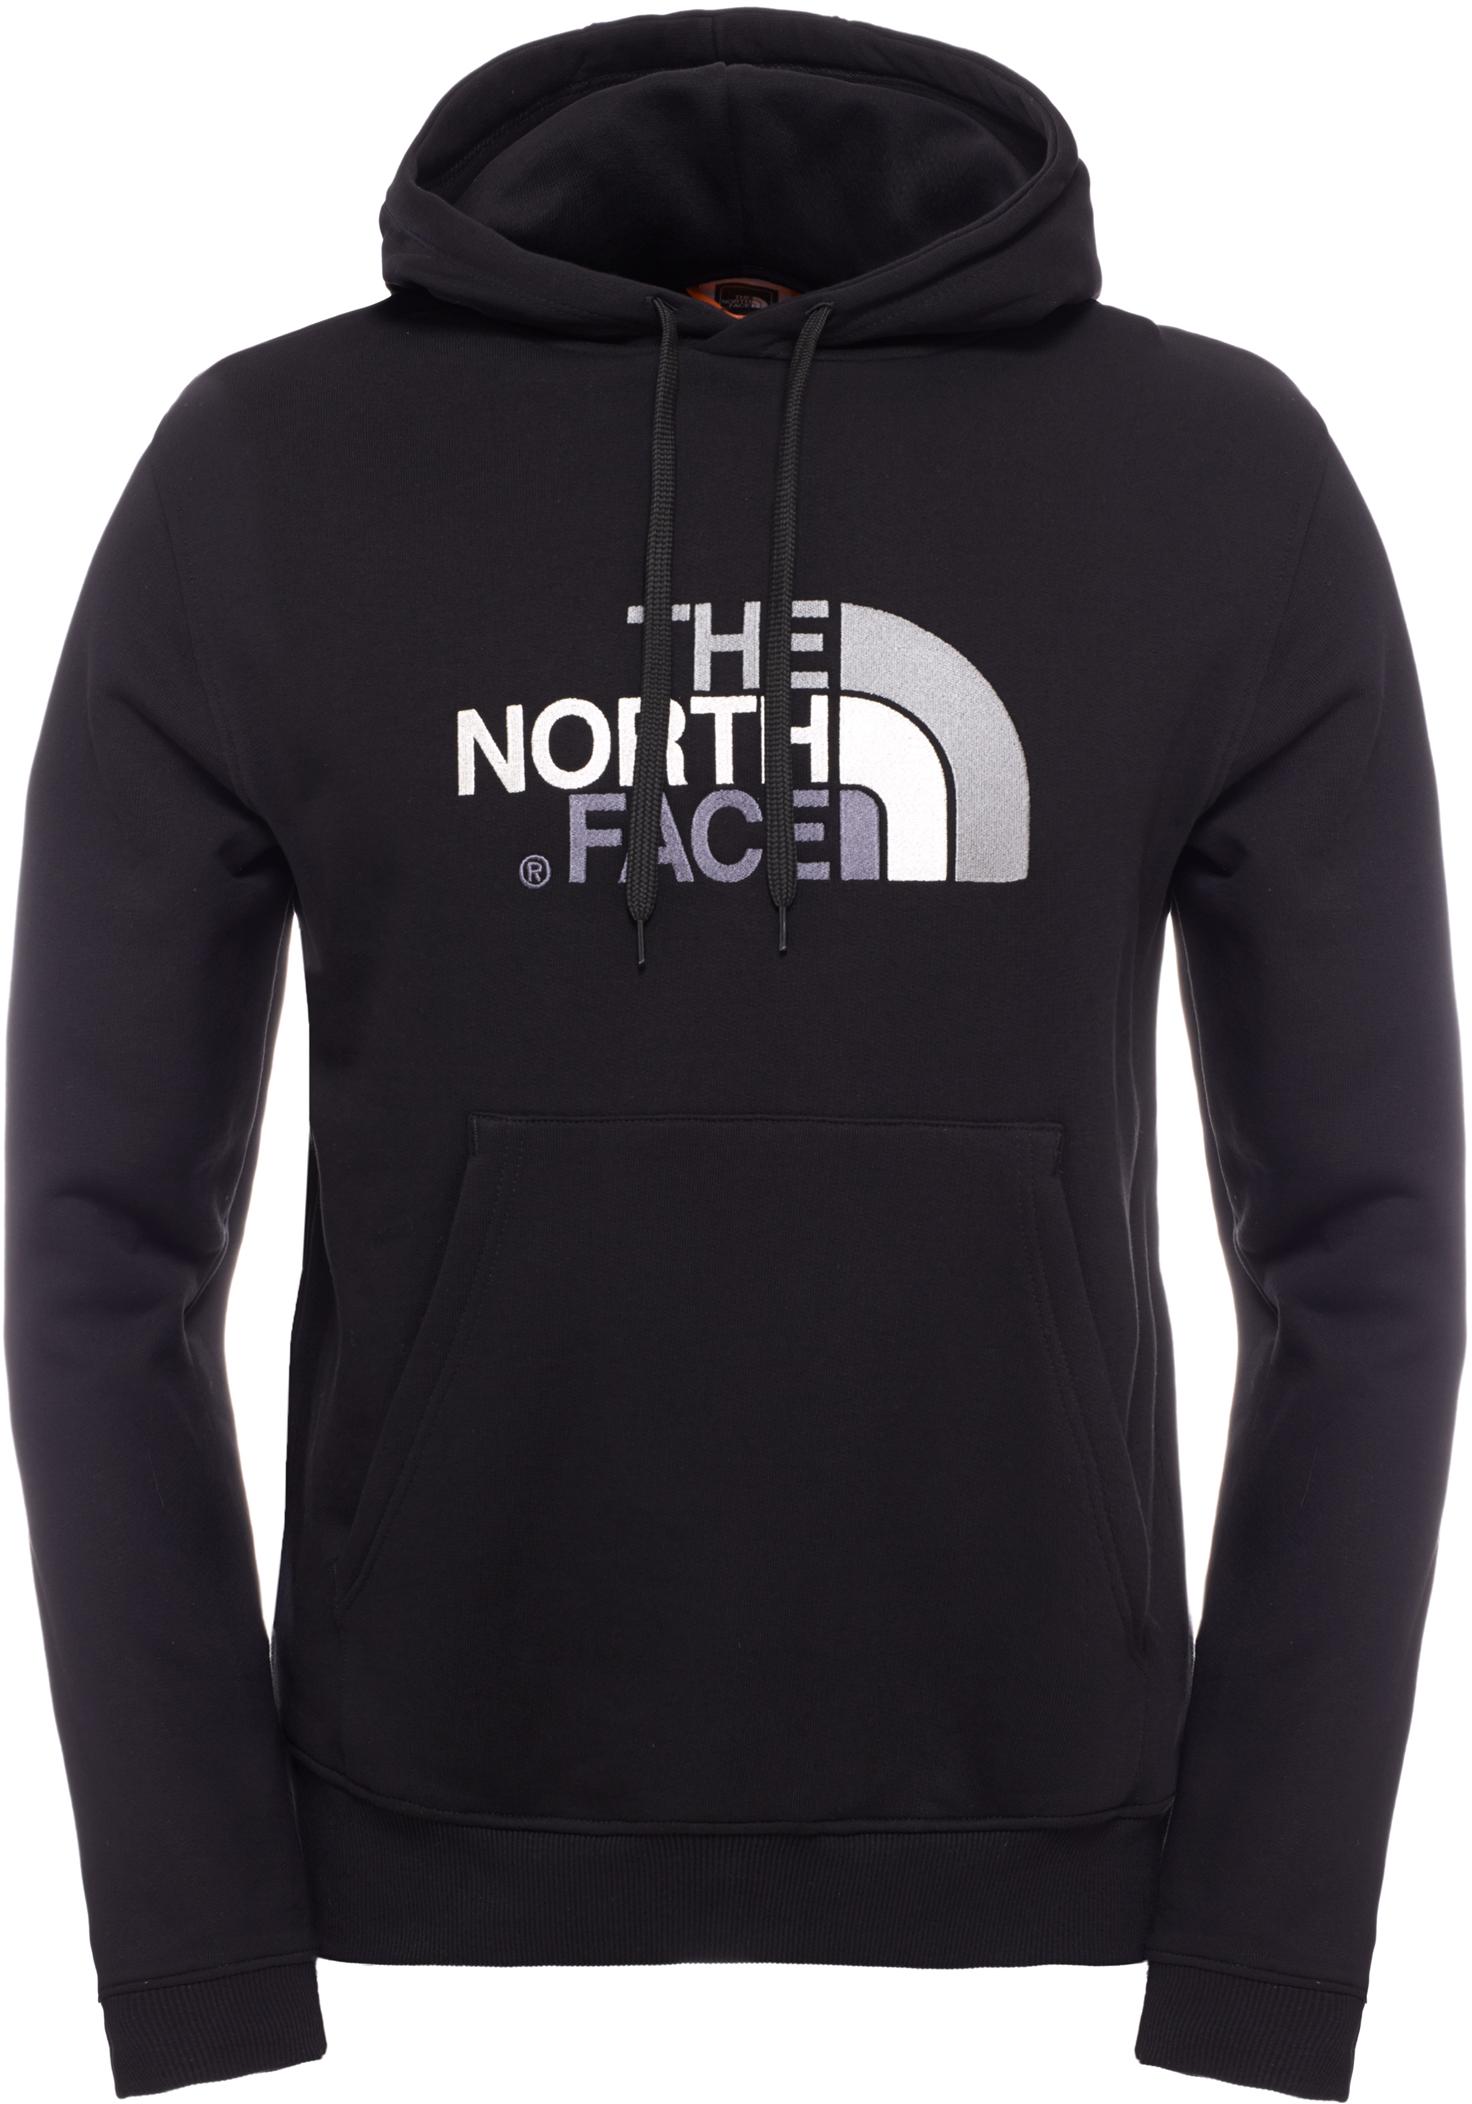 The North Face Drew Peak Pullover Hoodie - Tnf Black